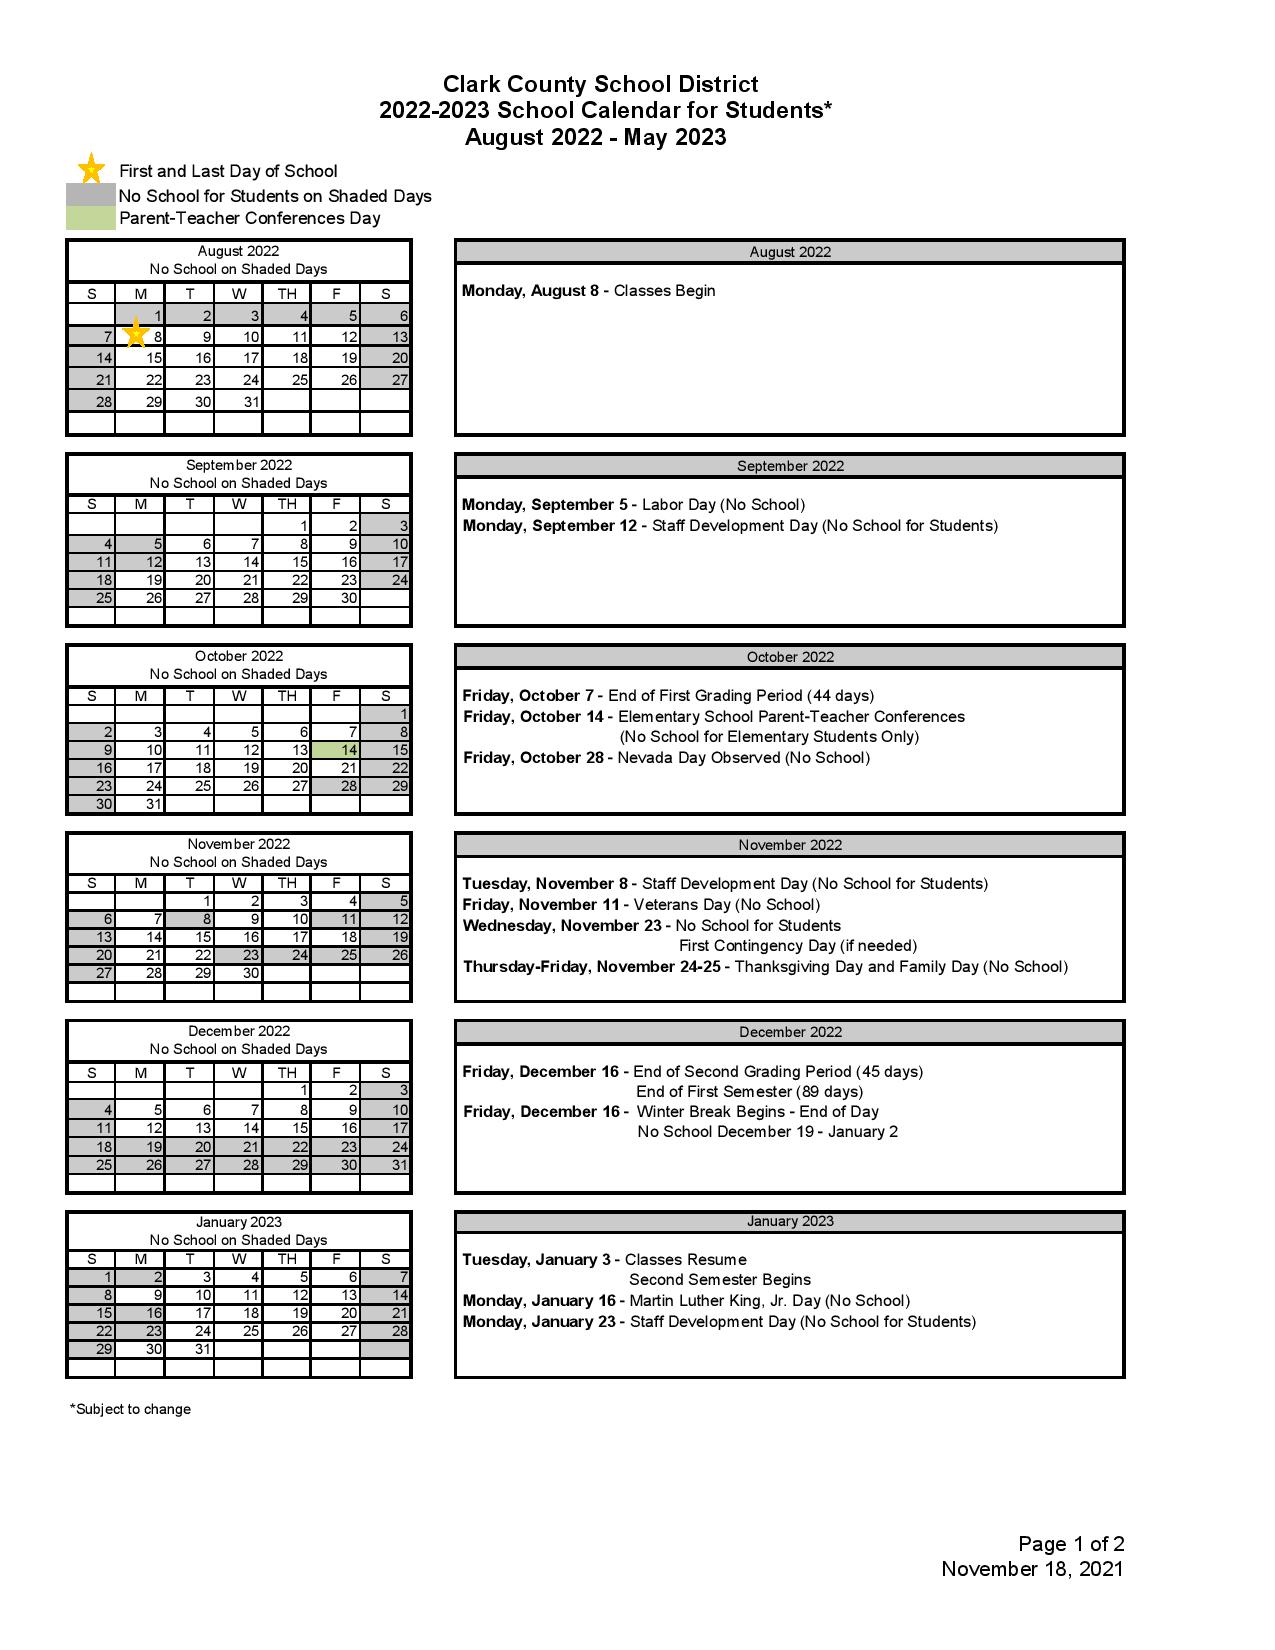 Clark County School District Calendar Holidays 2022 2023 PDF